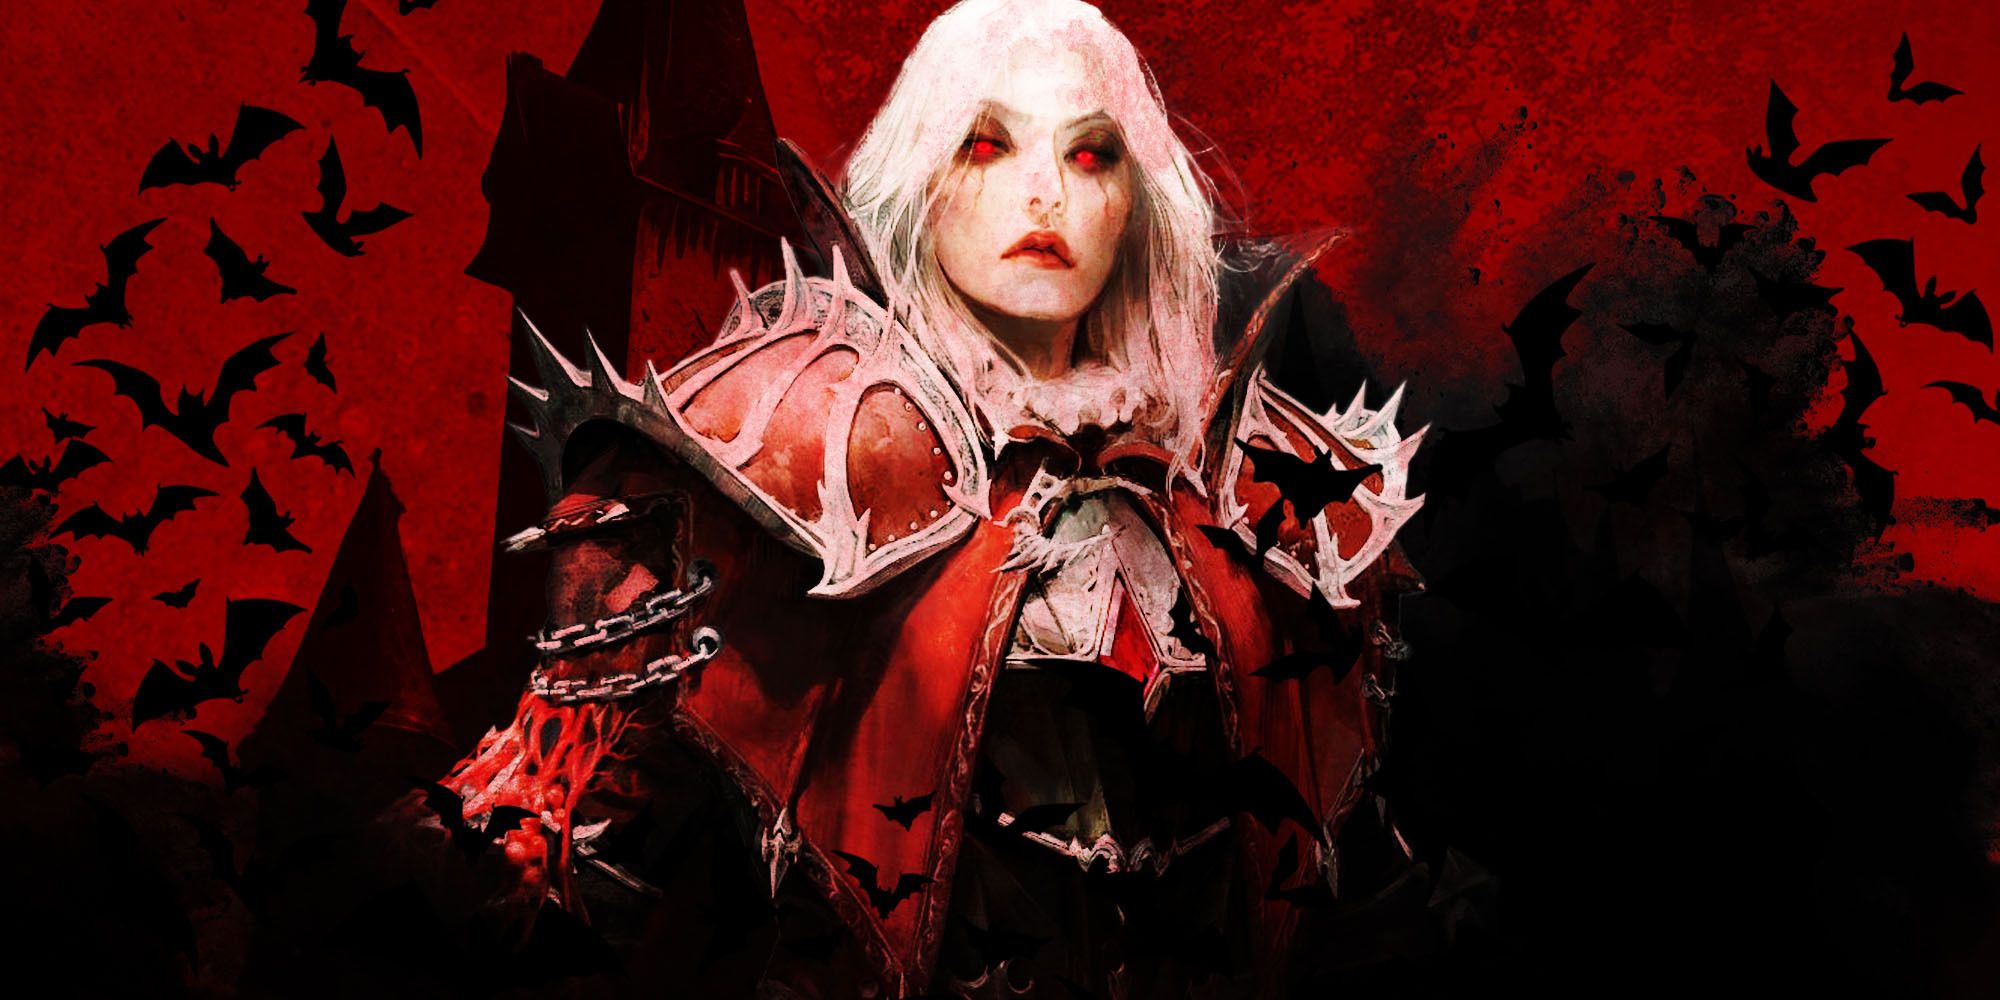 Diablo Immortal Introduces The Newest mid-range Vampiric Class